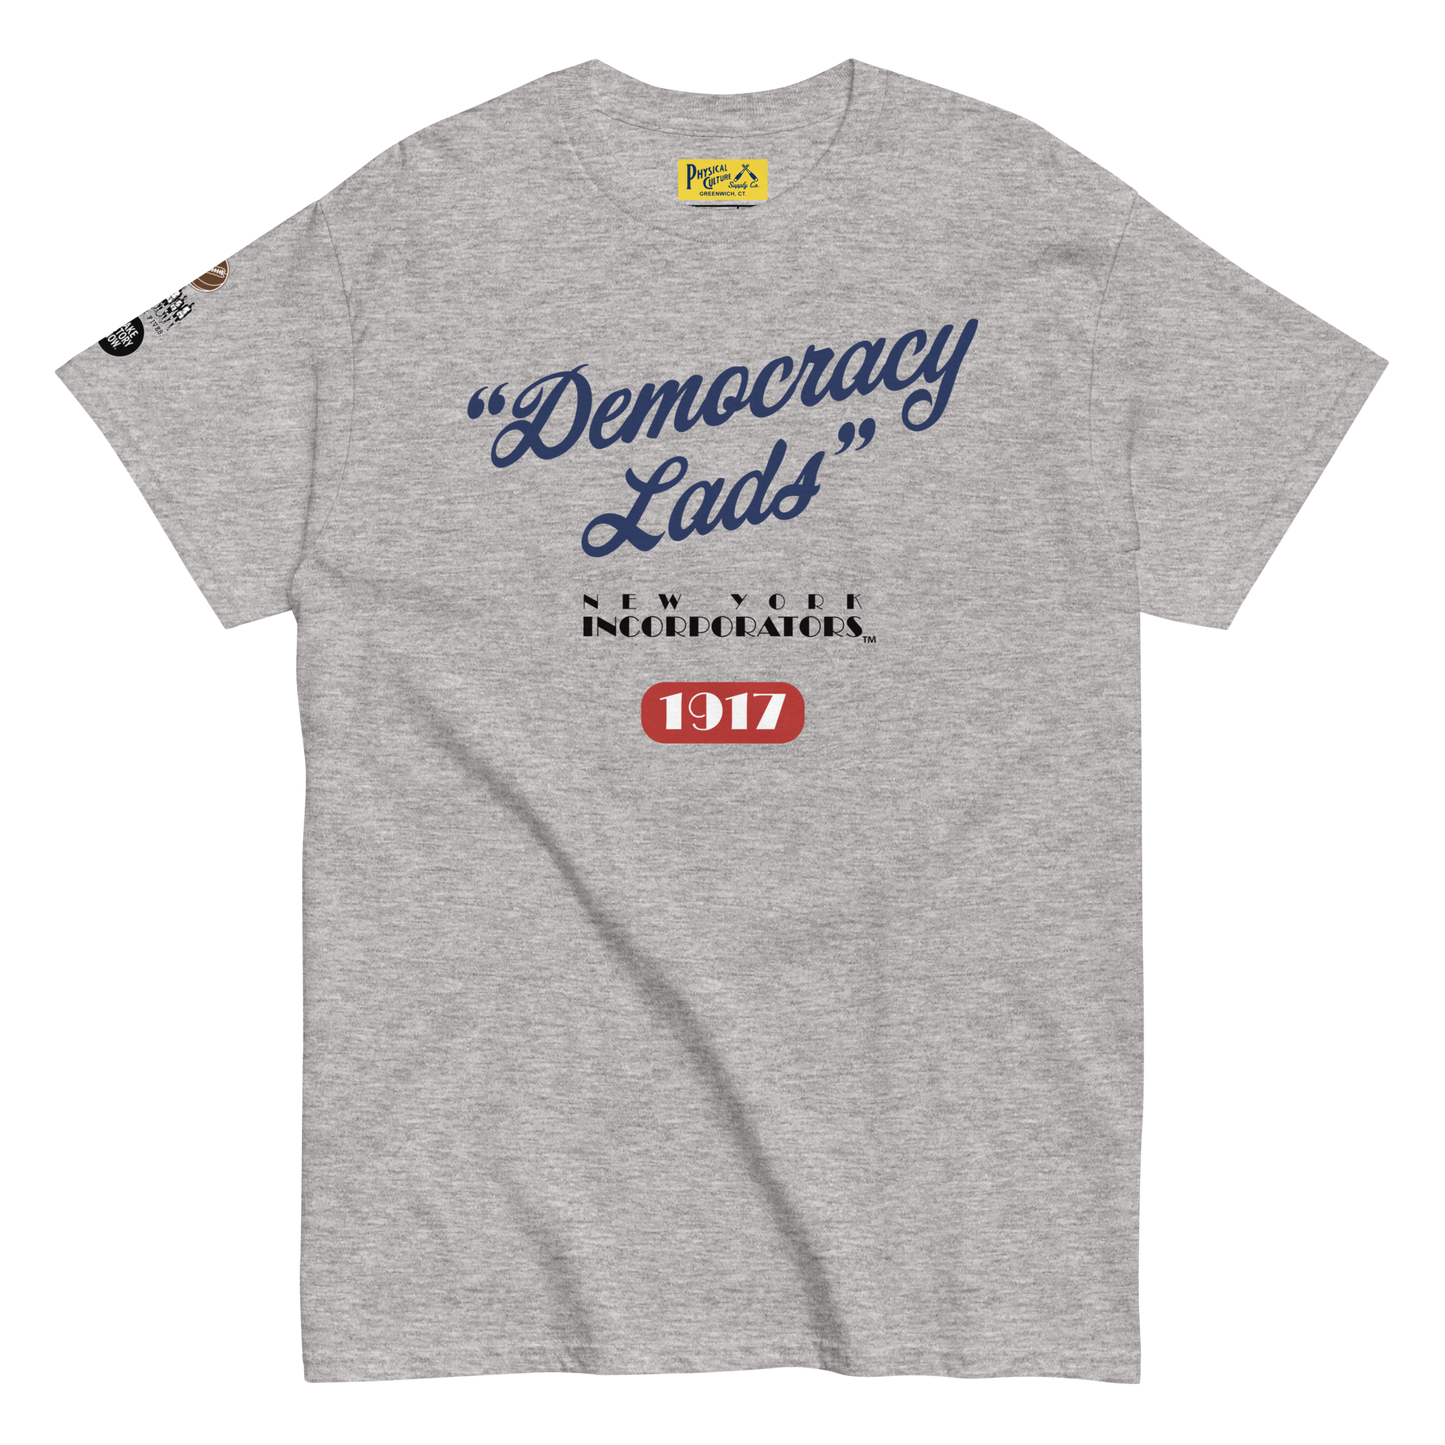 New York Incorporators Democracy Lads Short Sleeve Tee